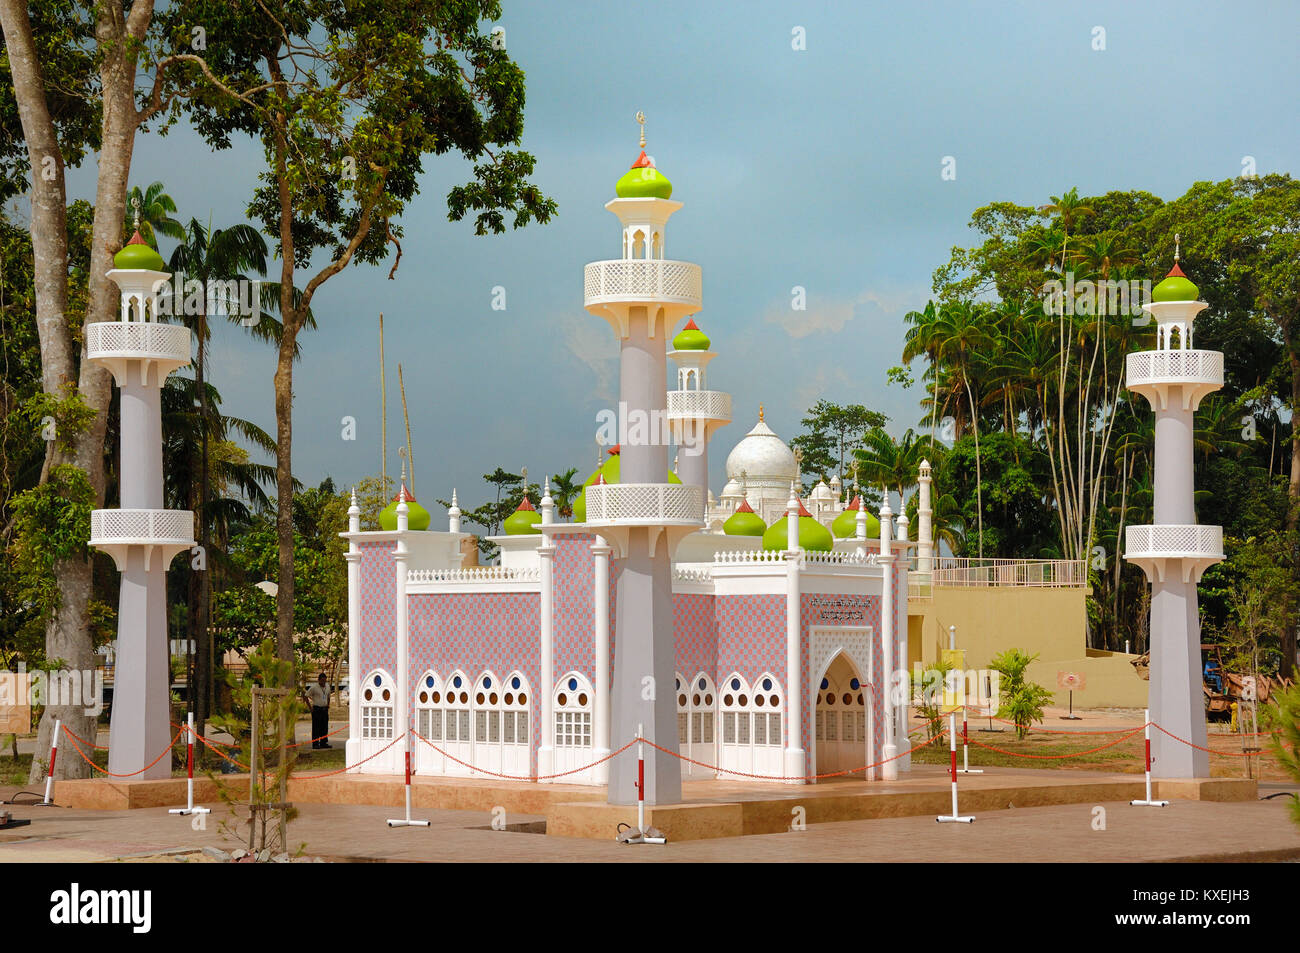 Maqueta o réplica de la Mezquita Central de Pattani, Tailandia al patrimonio islámico Park o parque temático, Kuala Terengganu, Malasia Foto de stock